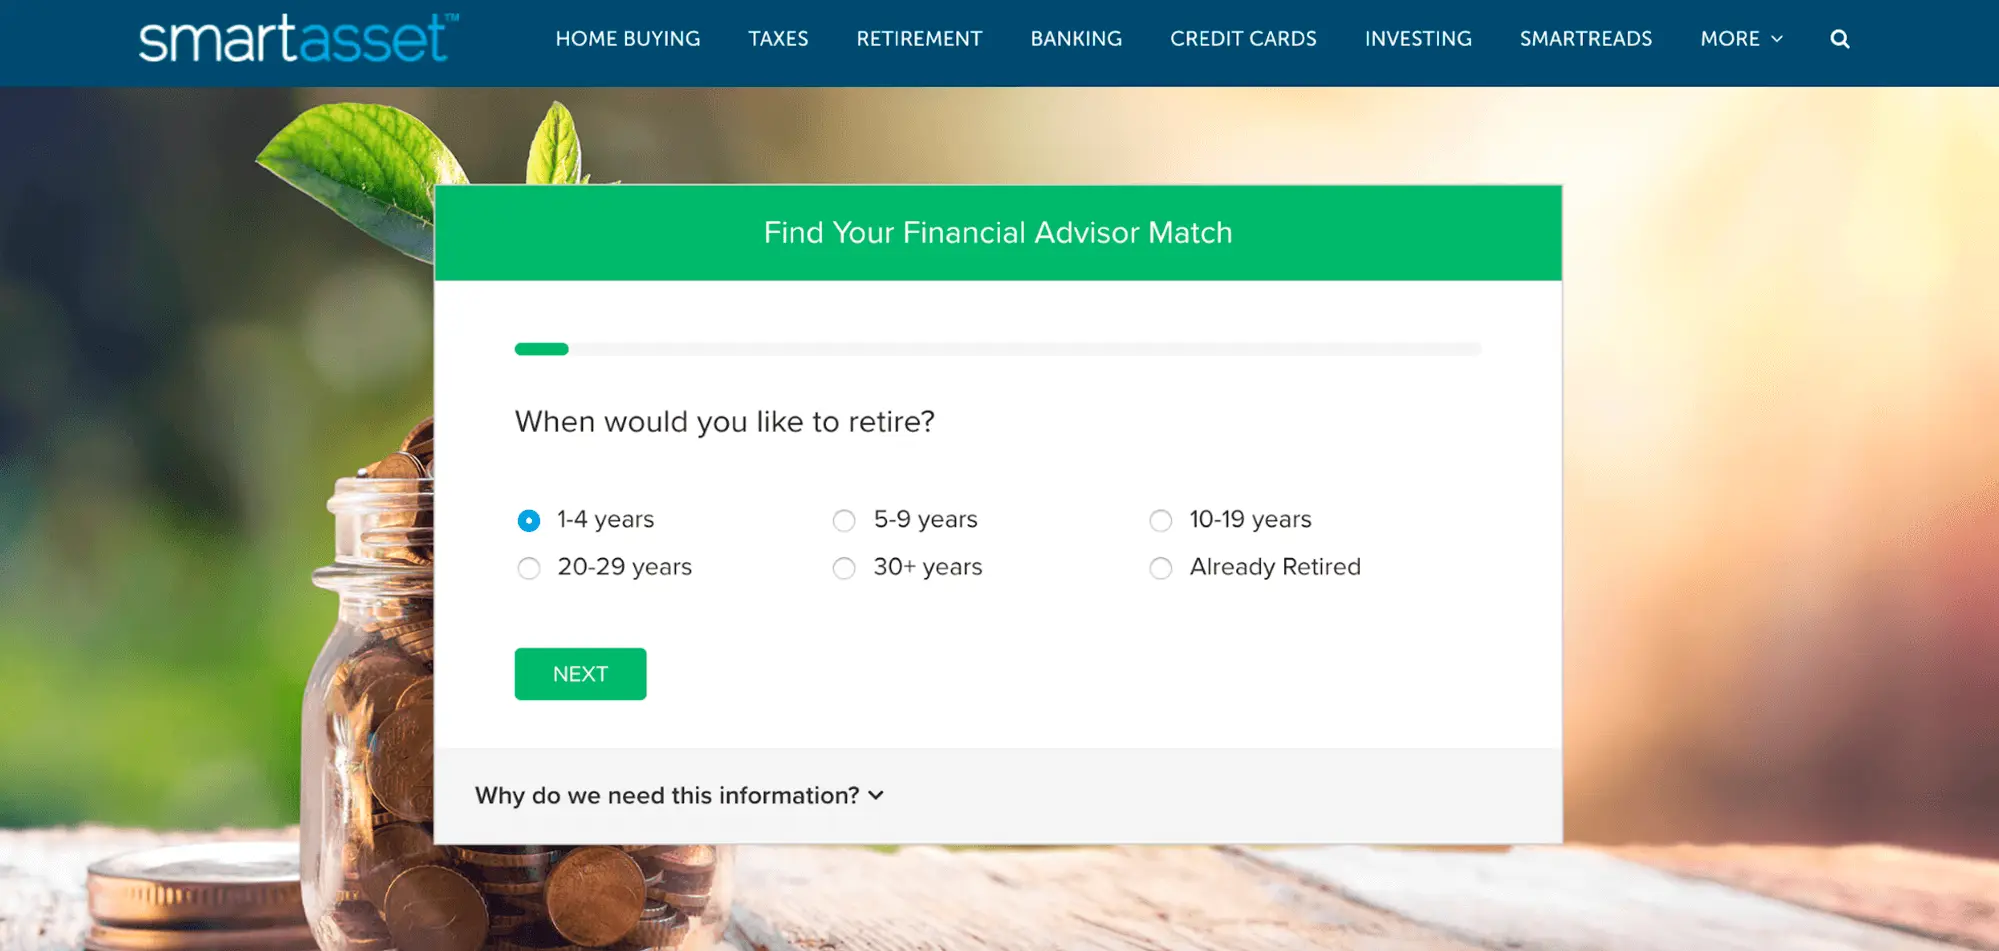 SmartAsset-matched financial advisors application process